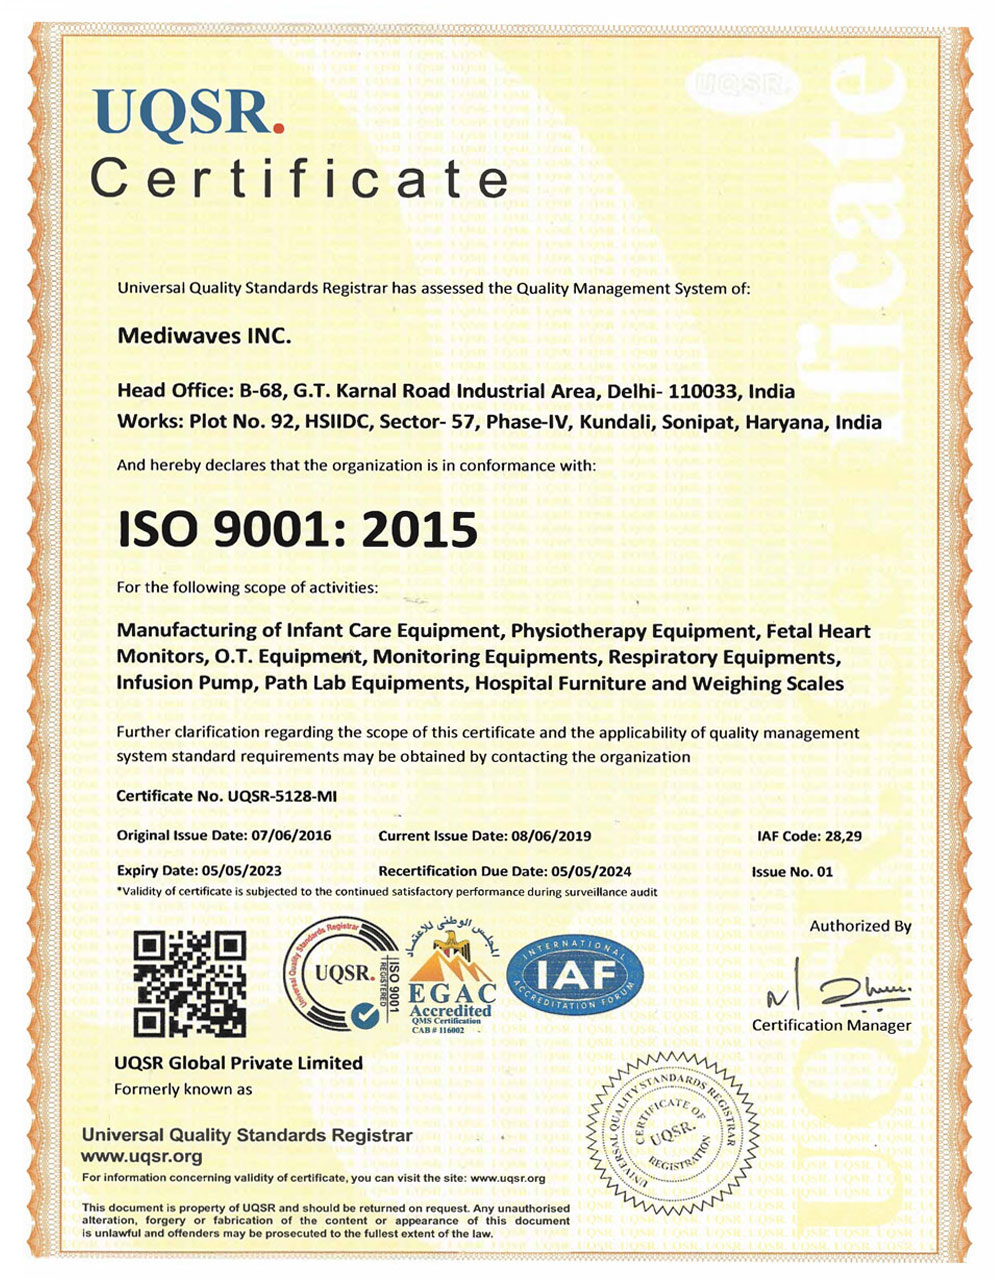 UQSR Certificate ISO 9001:2015